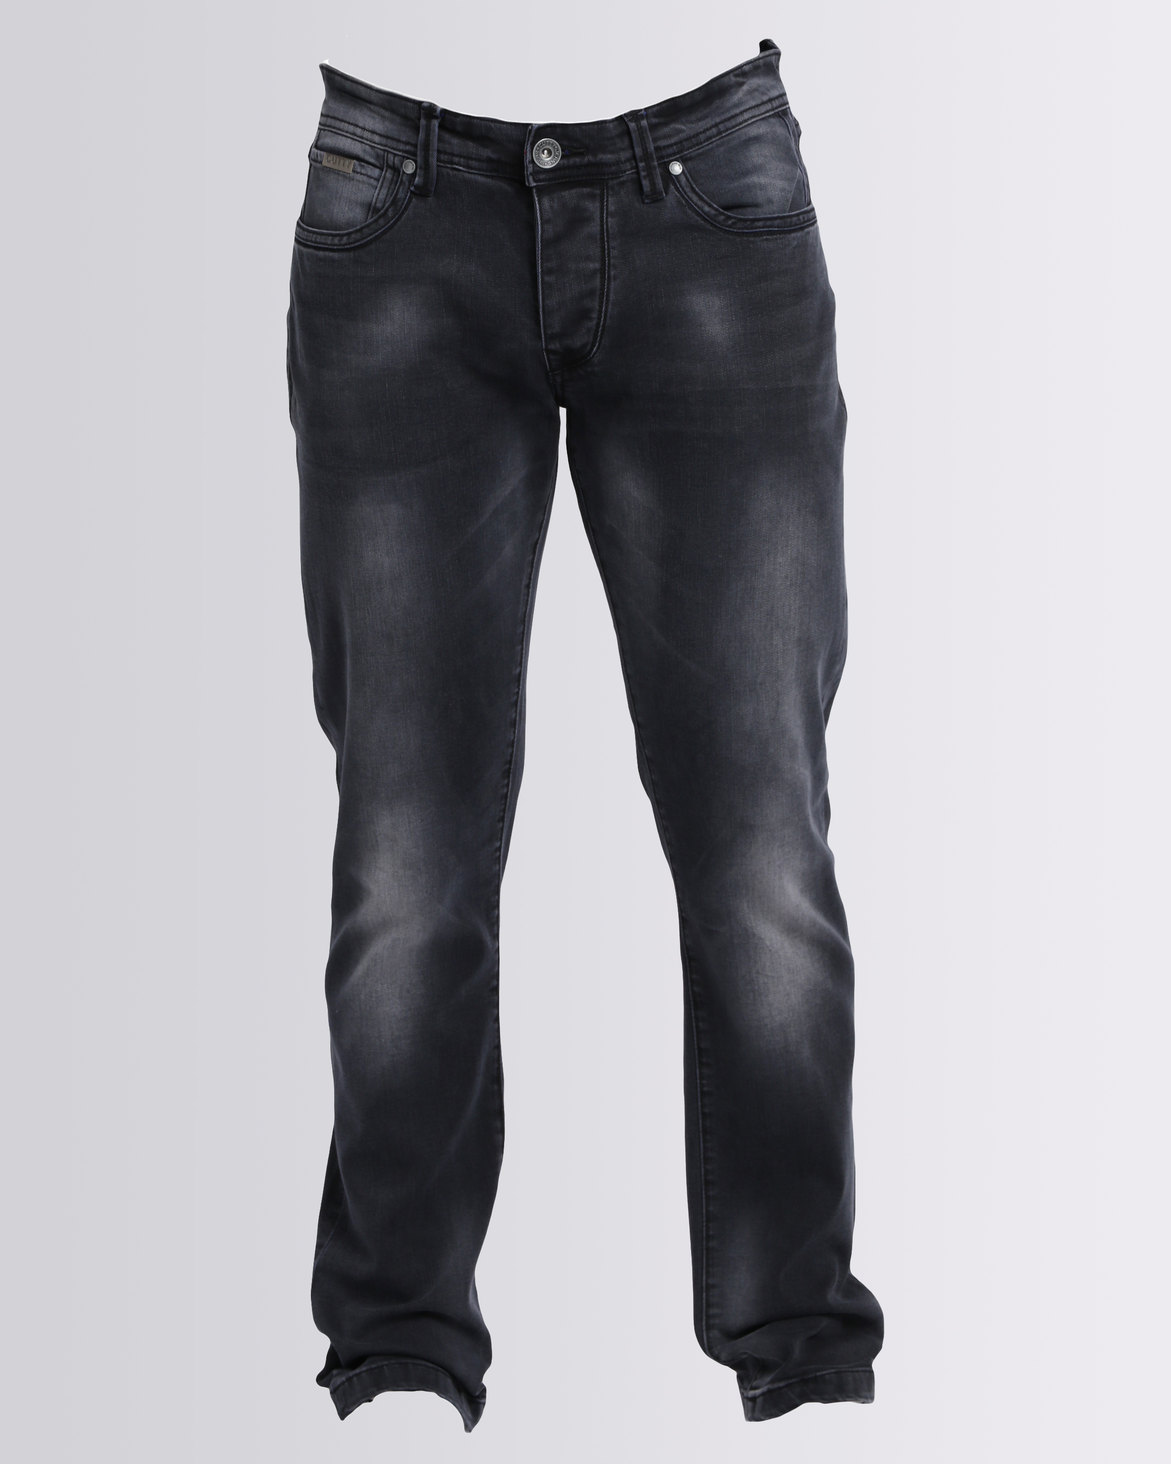 Cutty C Strat Denim Jeans Black | Zando